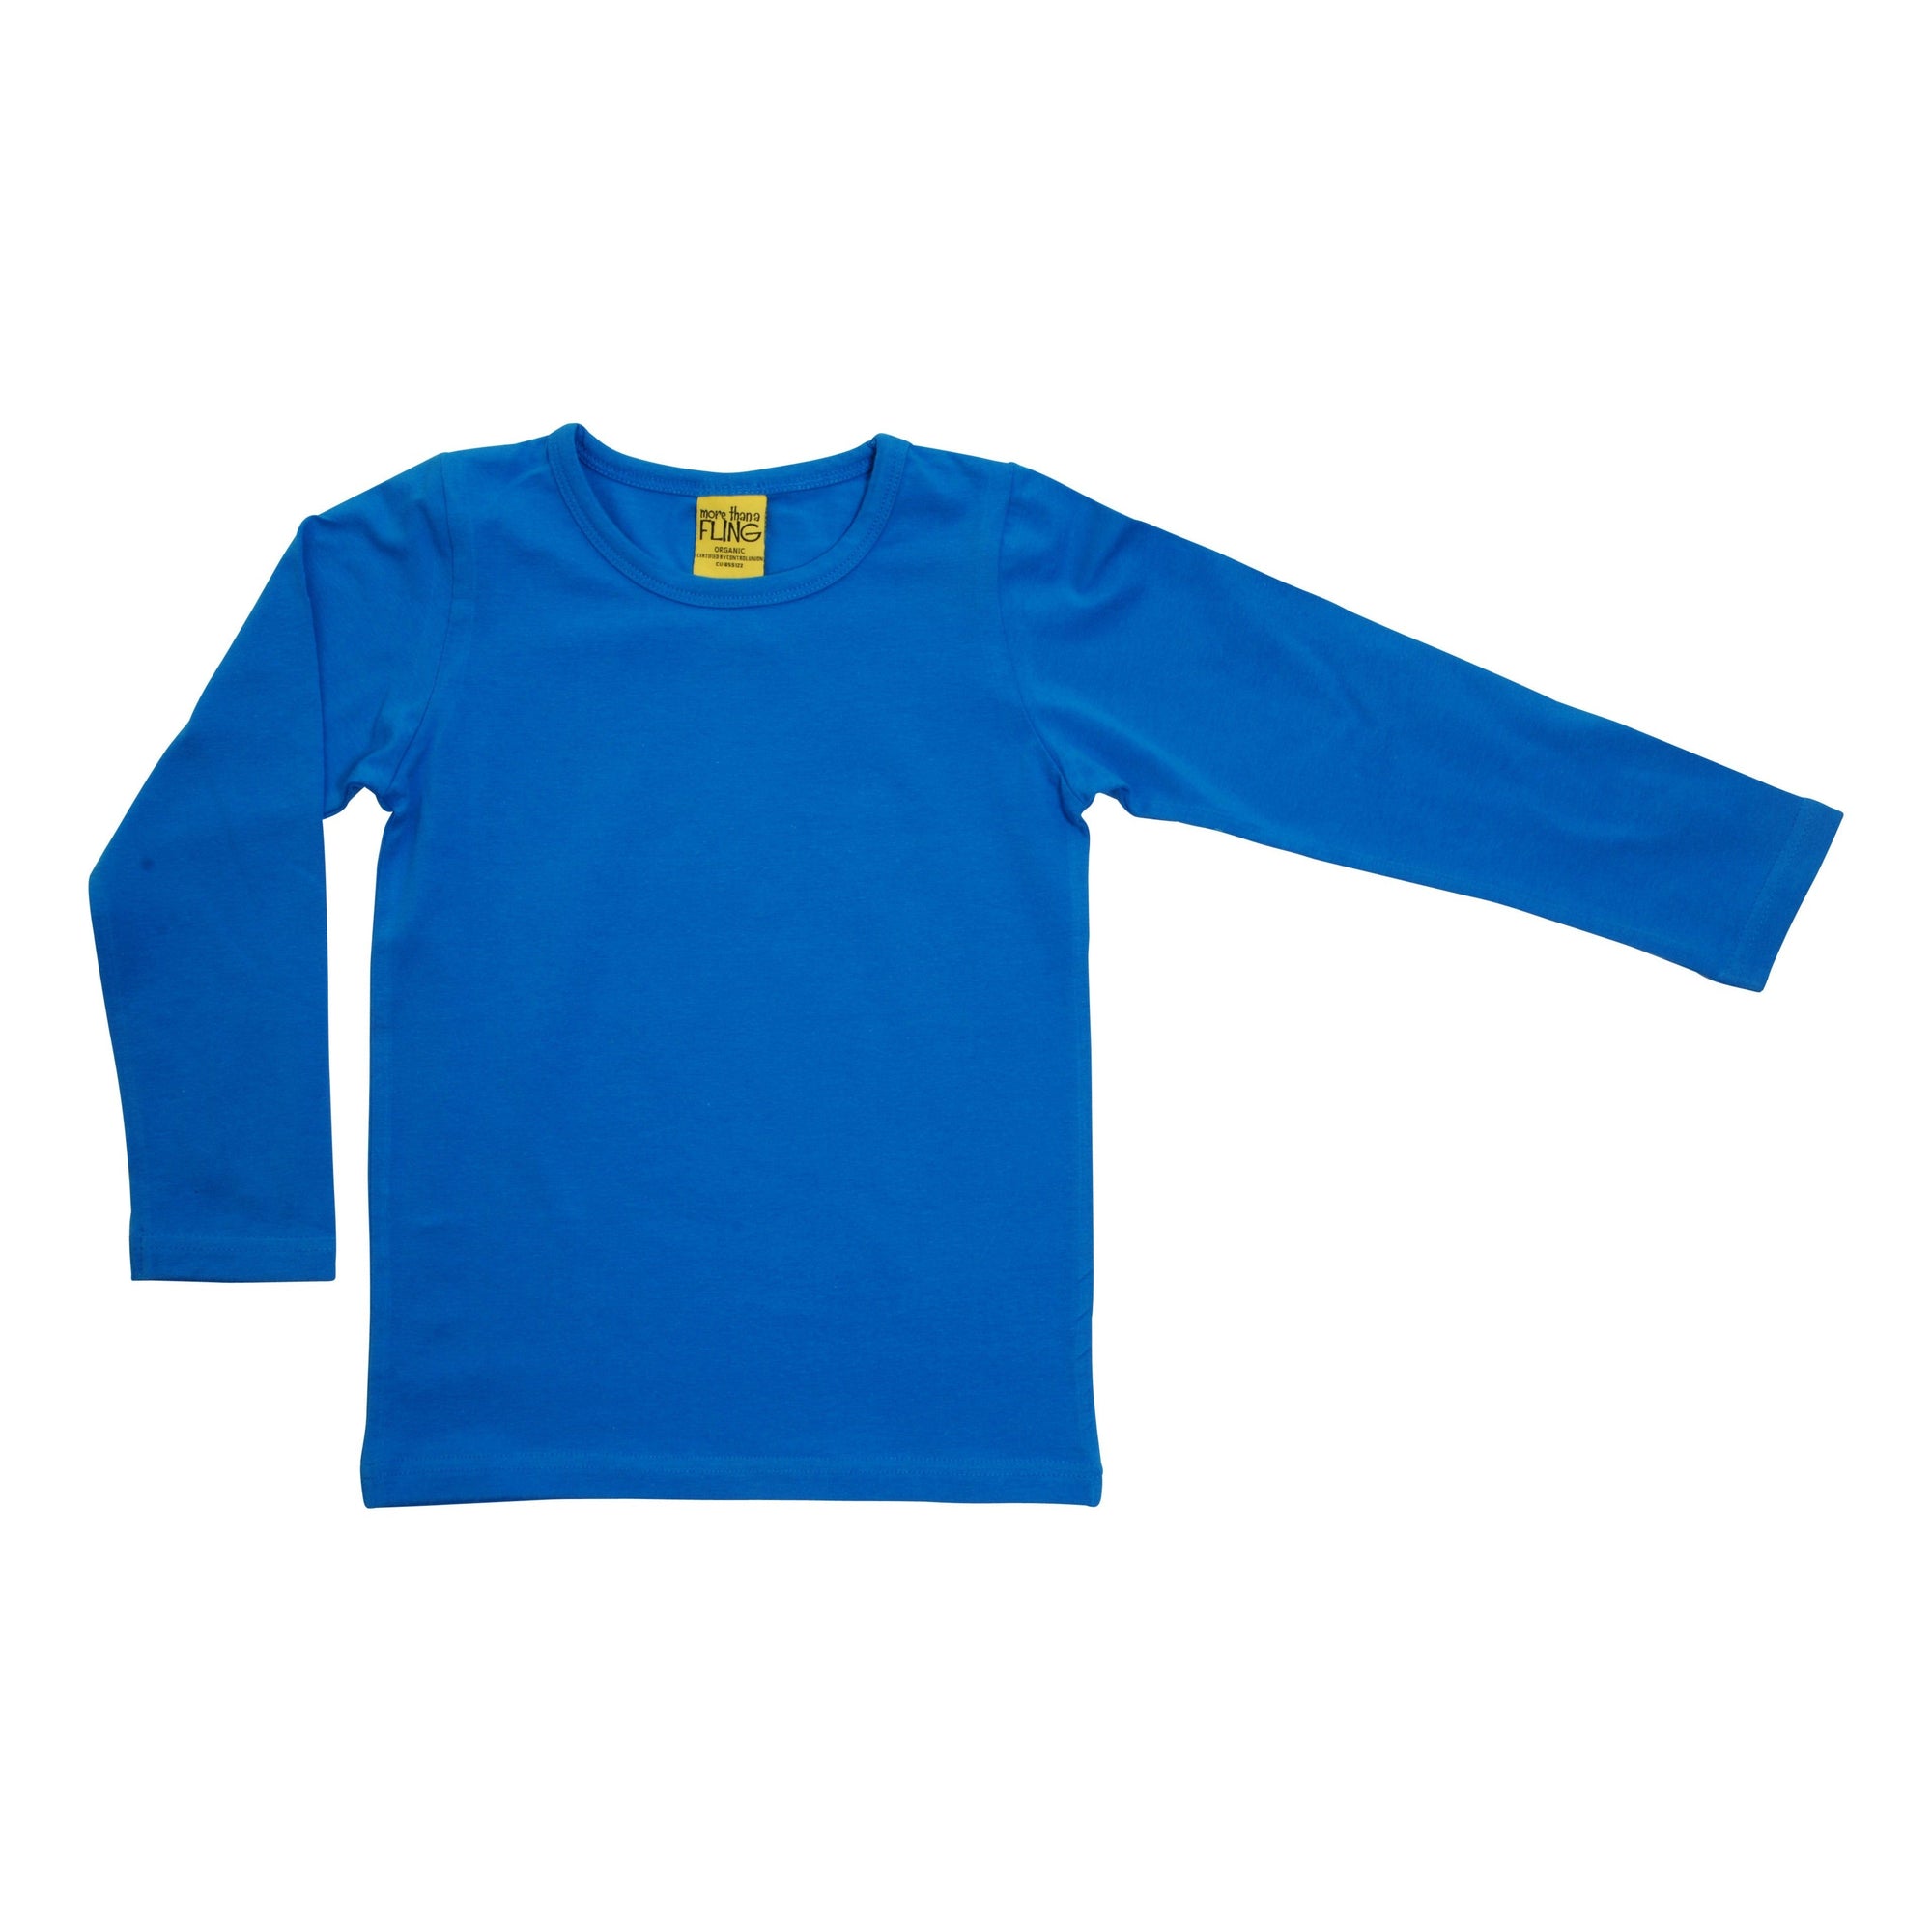 Blue Aster Long Sleeve Shirt - 2 Left Size 2-4 & 4-6 years-More Than A Fling-Modern Rascals